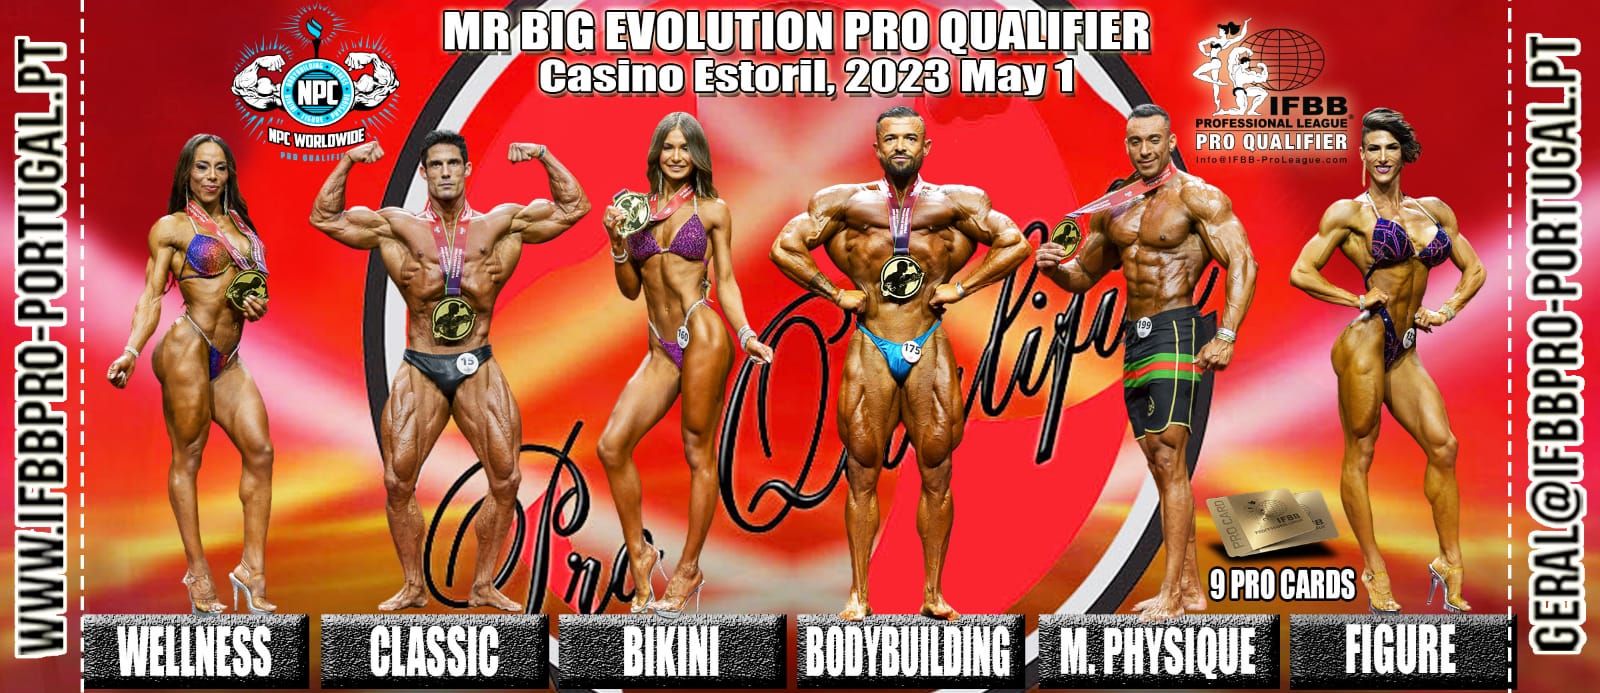 Mr Big Evolution Pro Qualifier